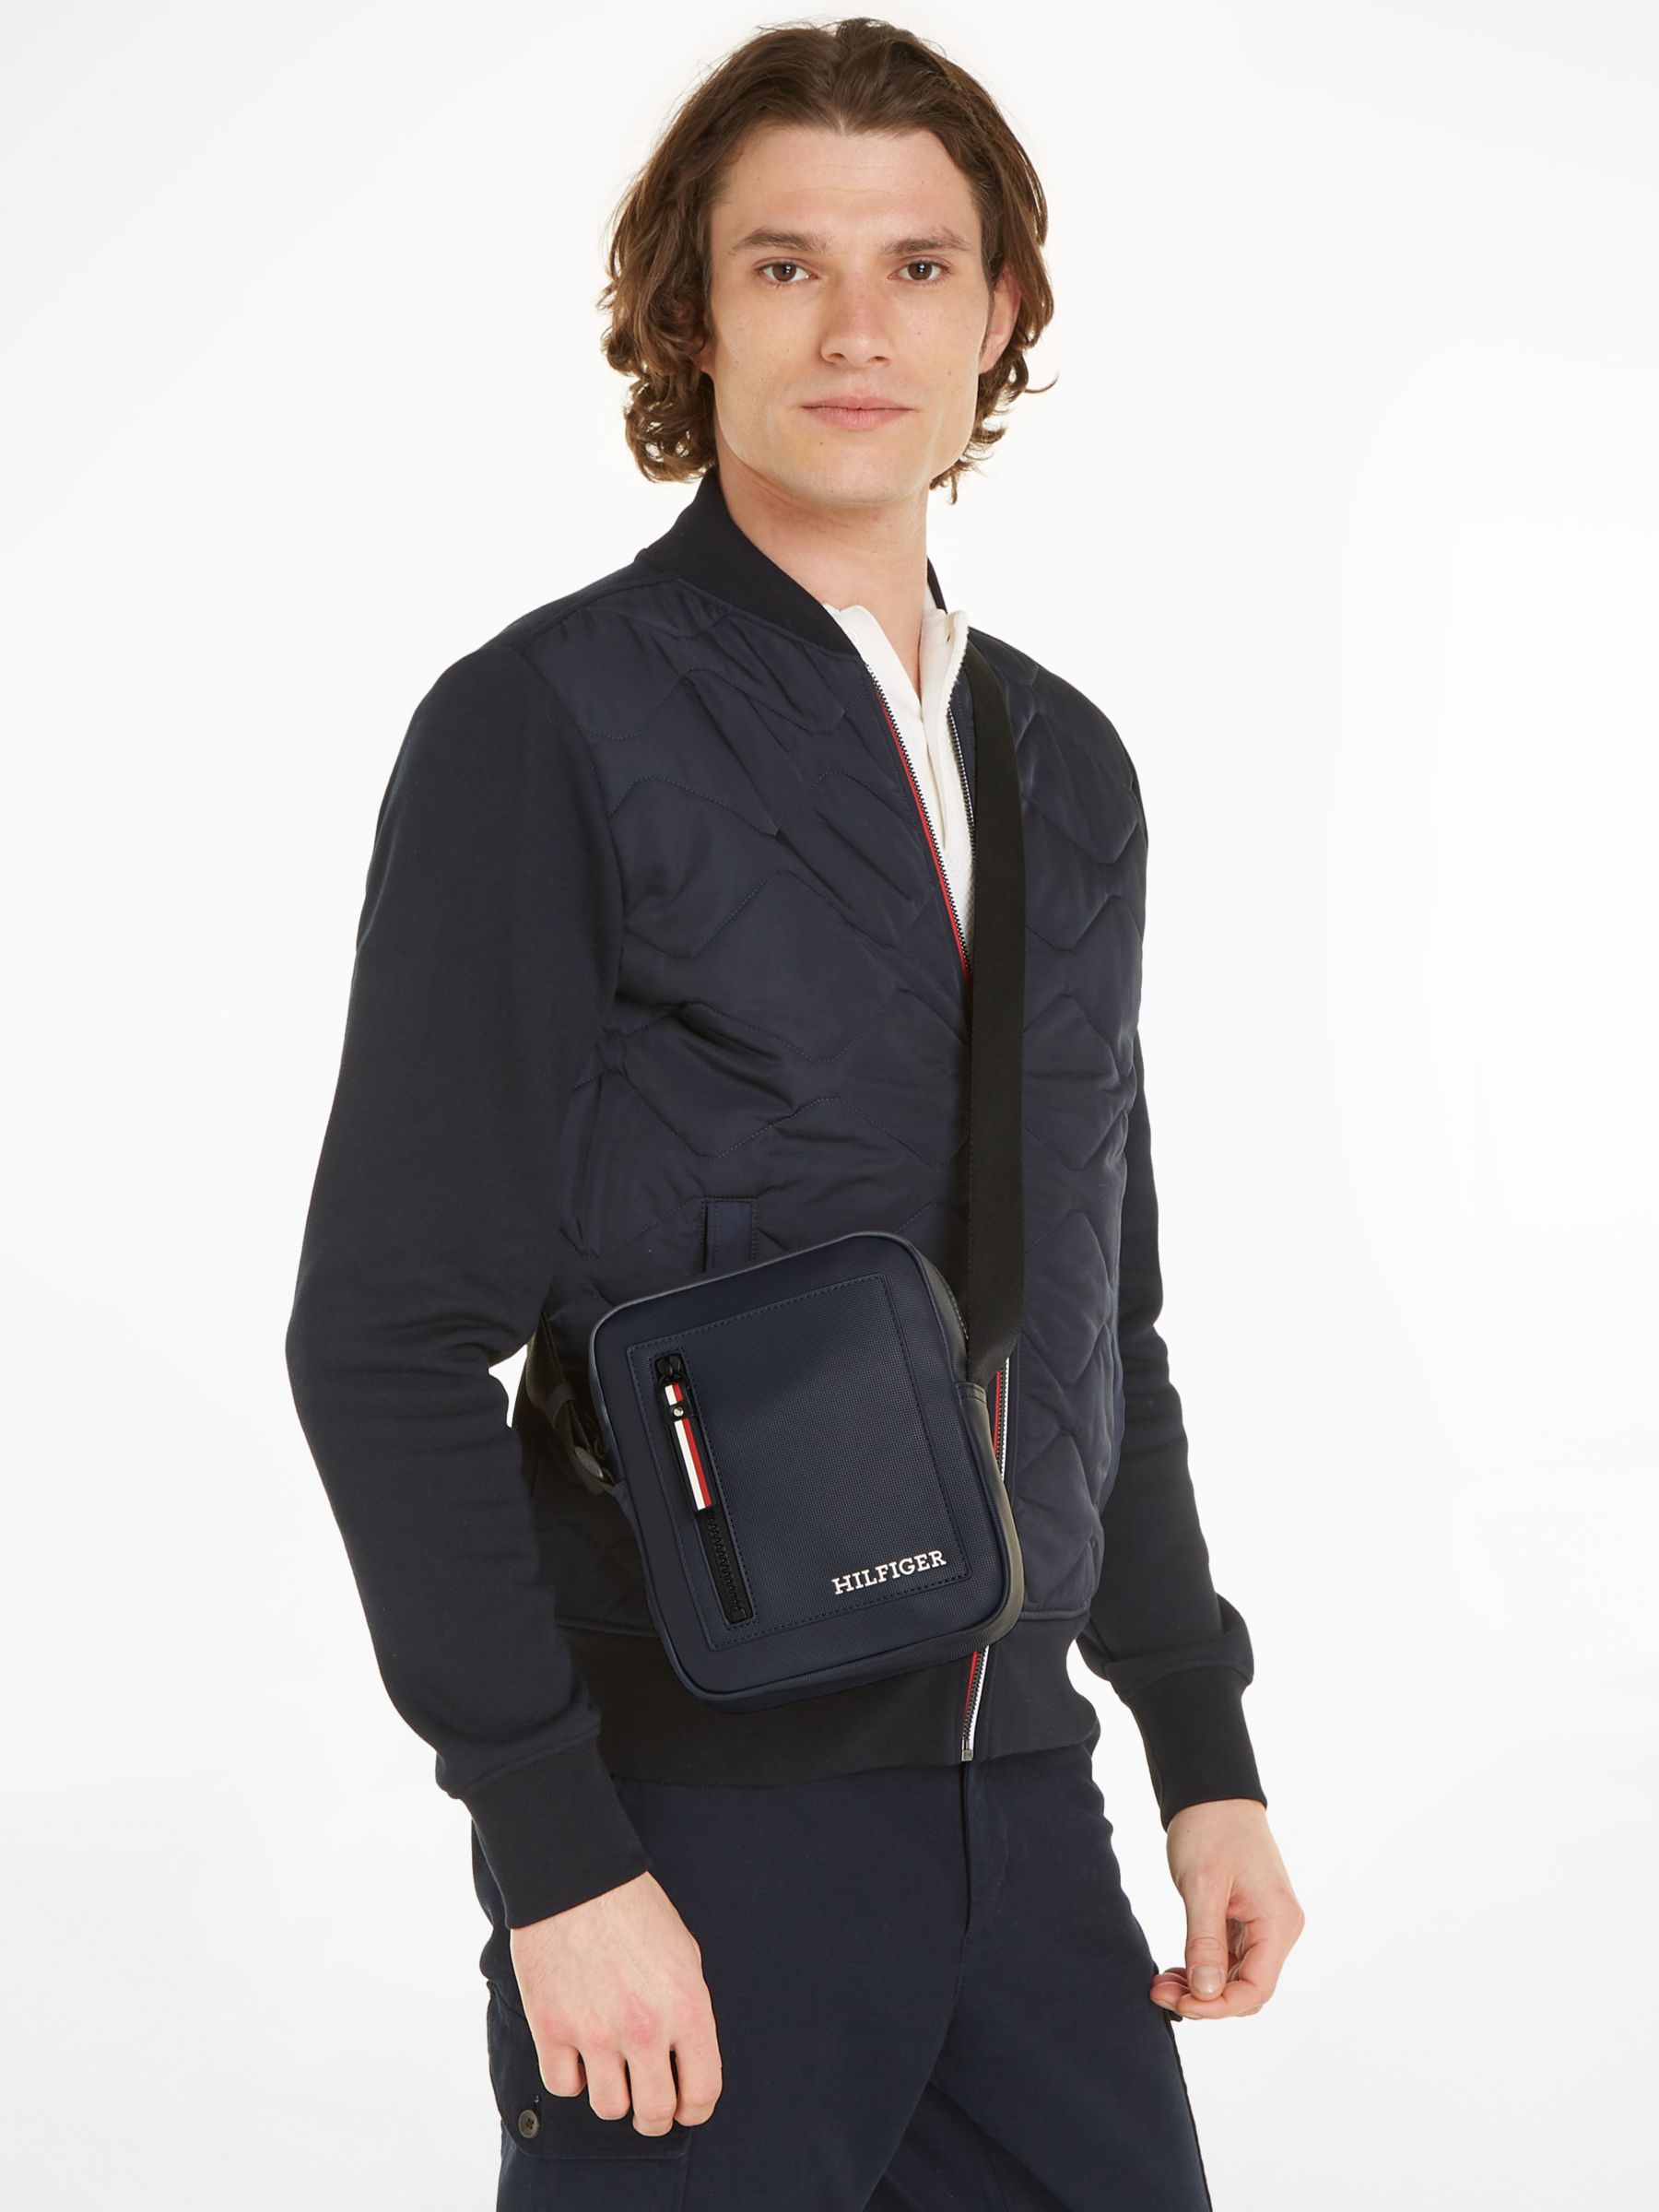 Tommy Hilfiger Pique Mini Cross Body Bag, Blue, One Size